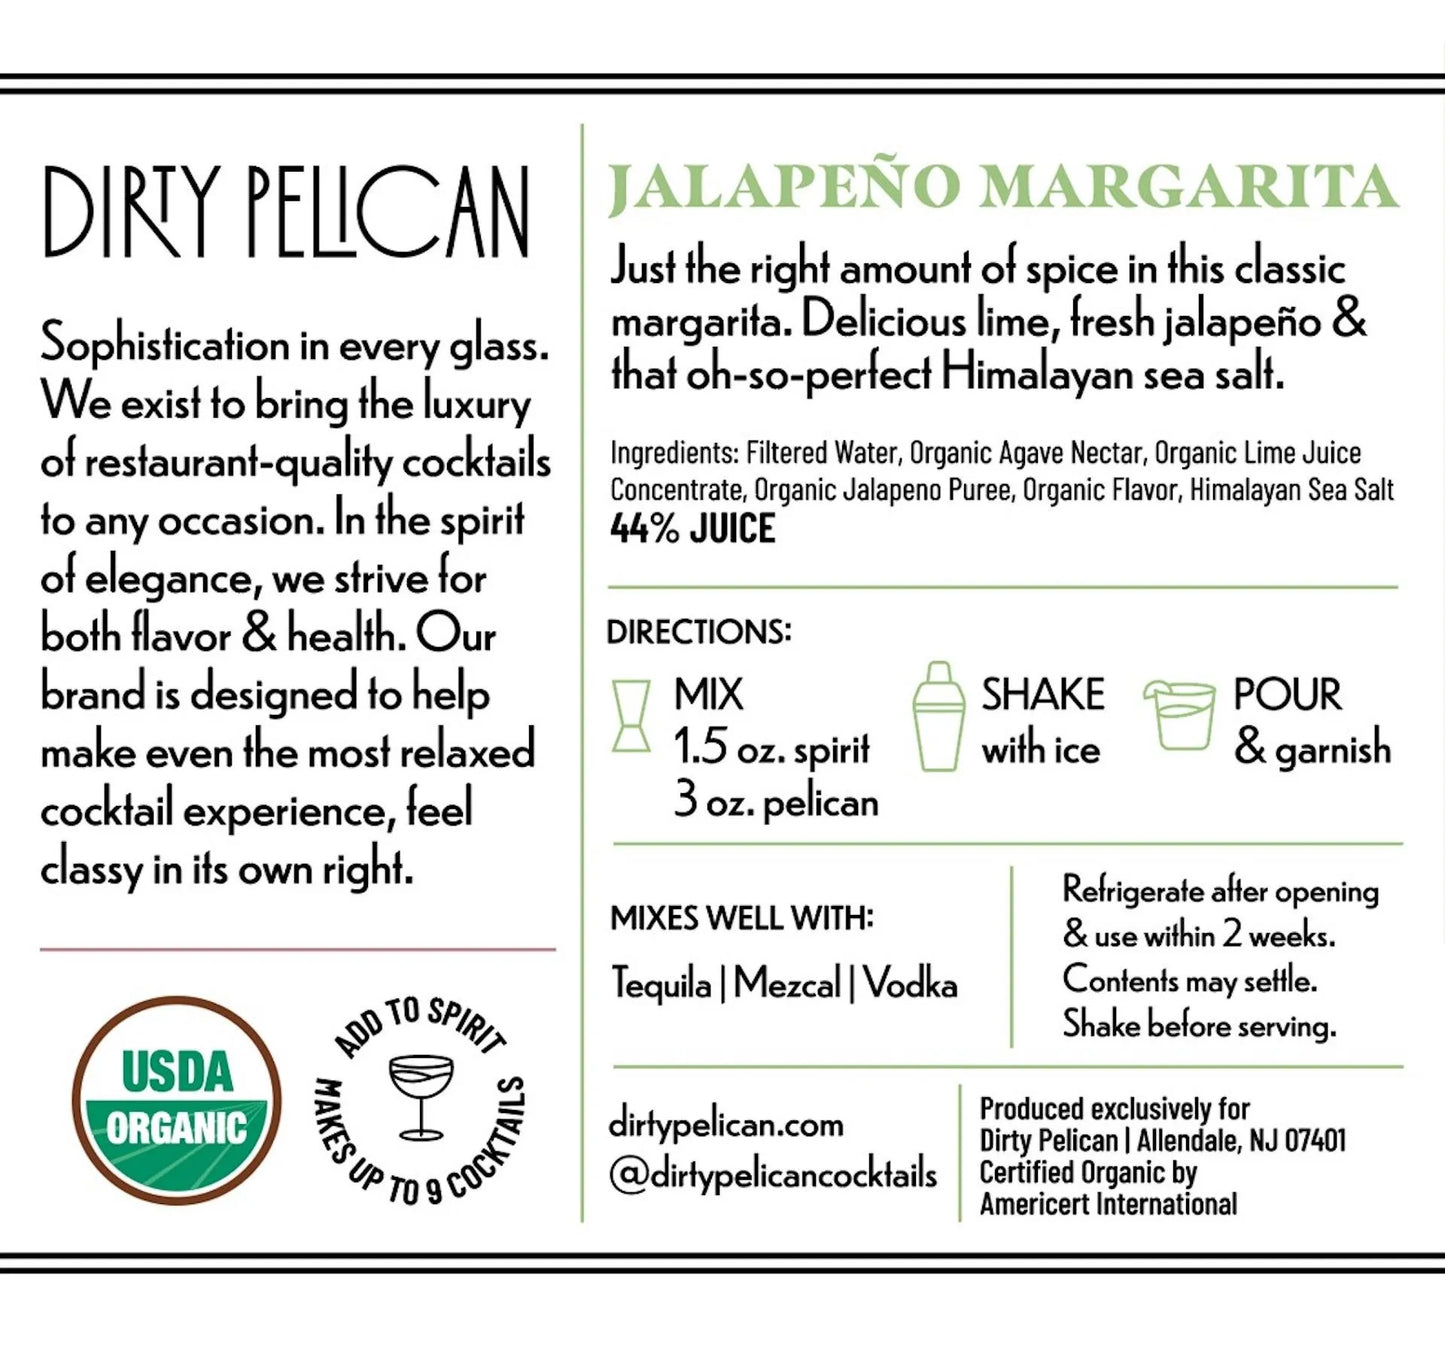 info from the jalapeño bottle